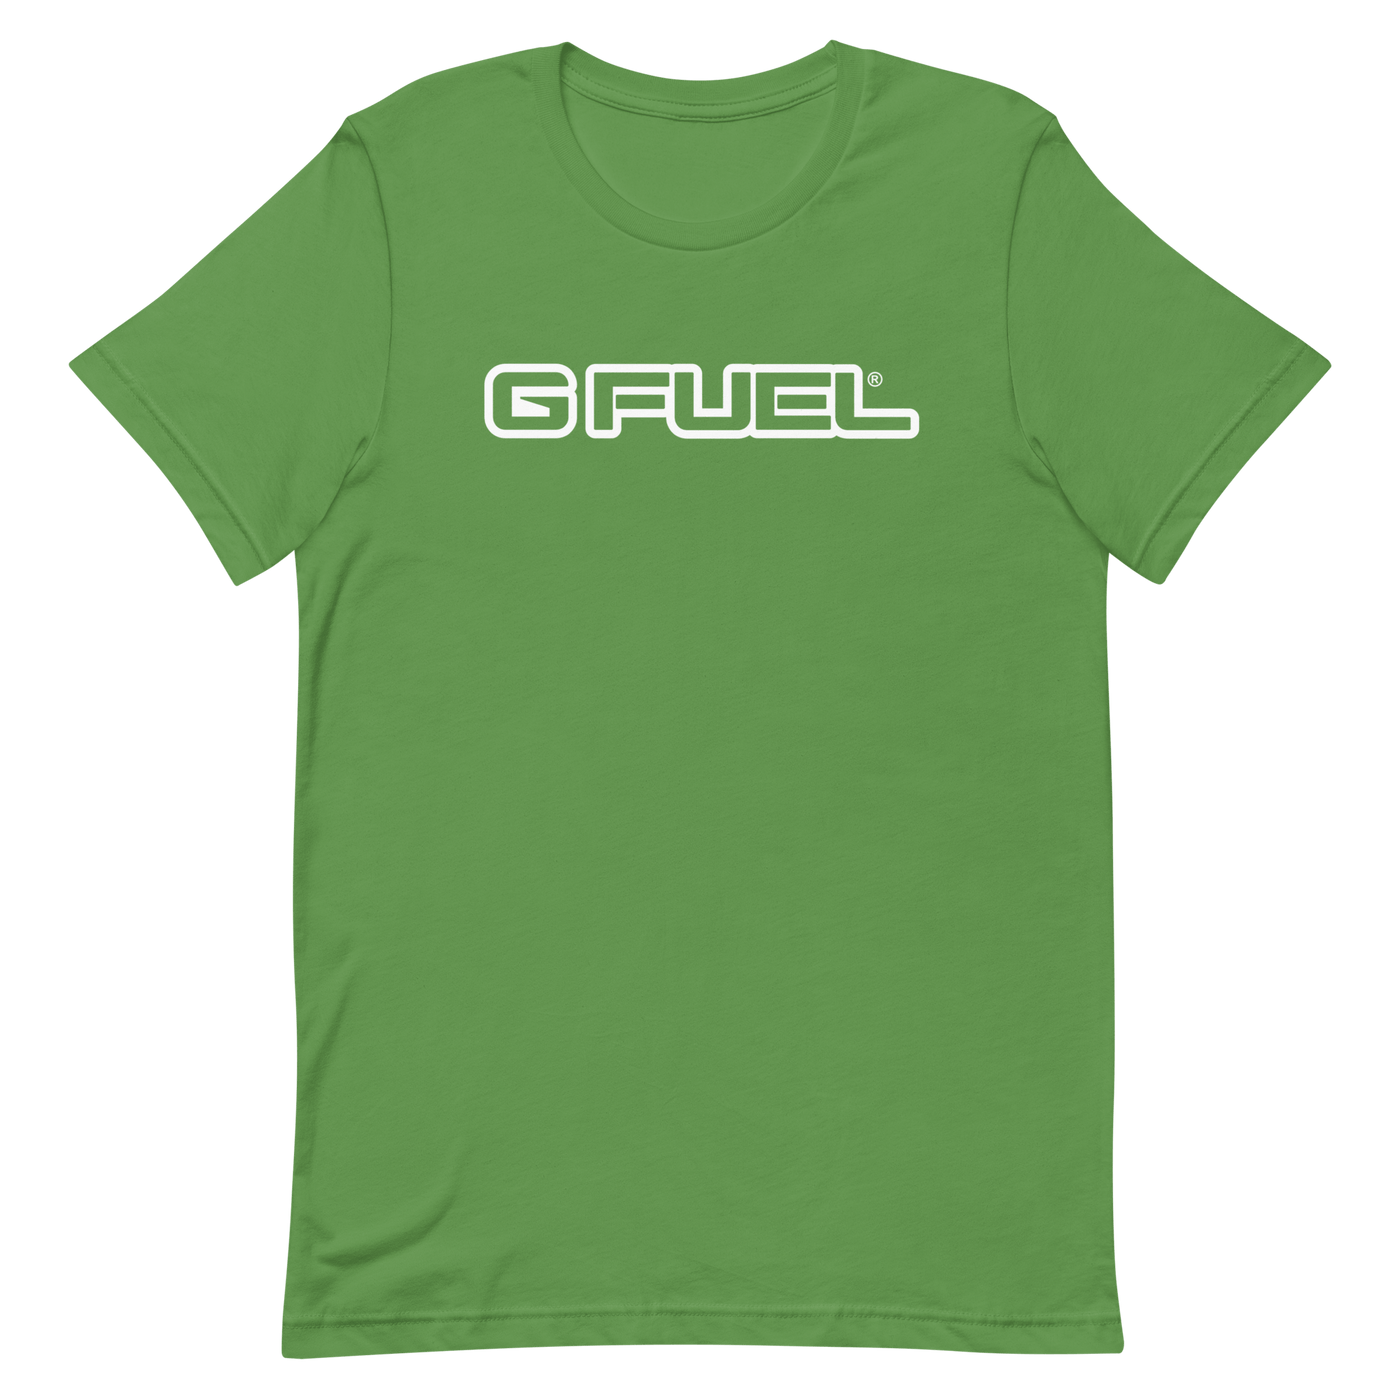 G FUEL| G FUEL T-shirt Pastels Shirt Leaf S 8913701_4091